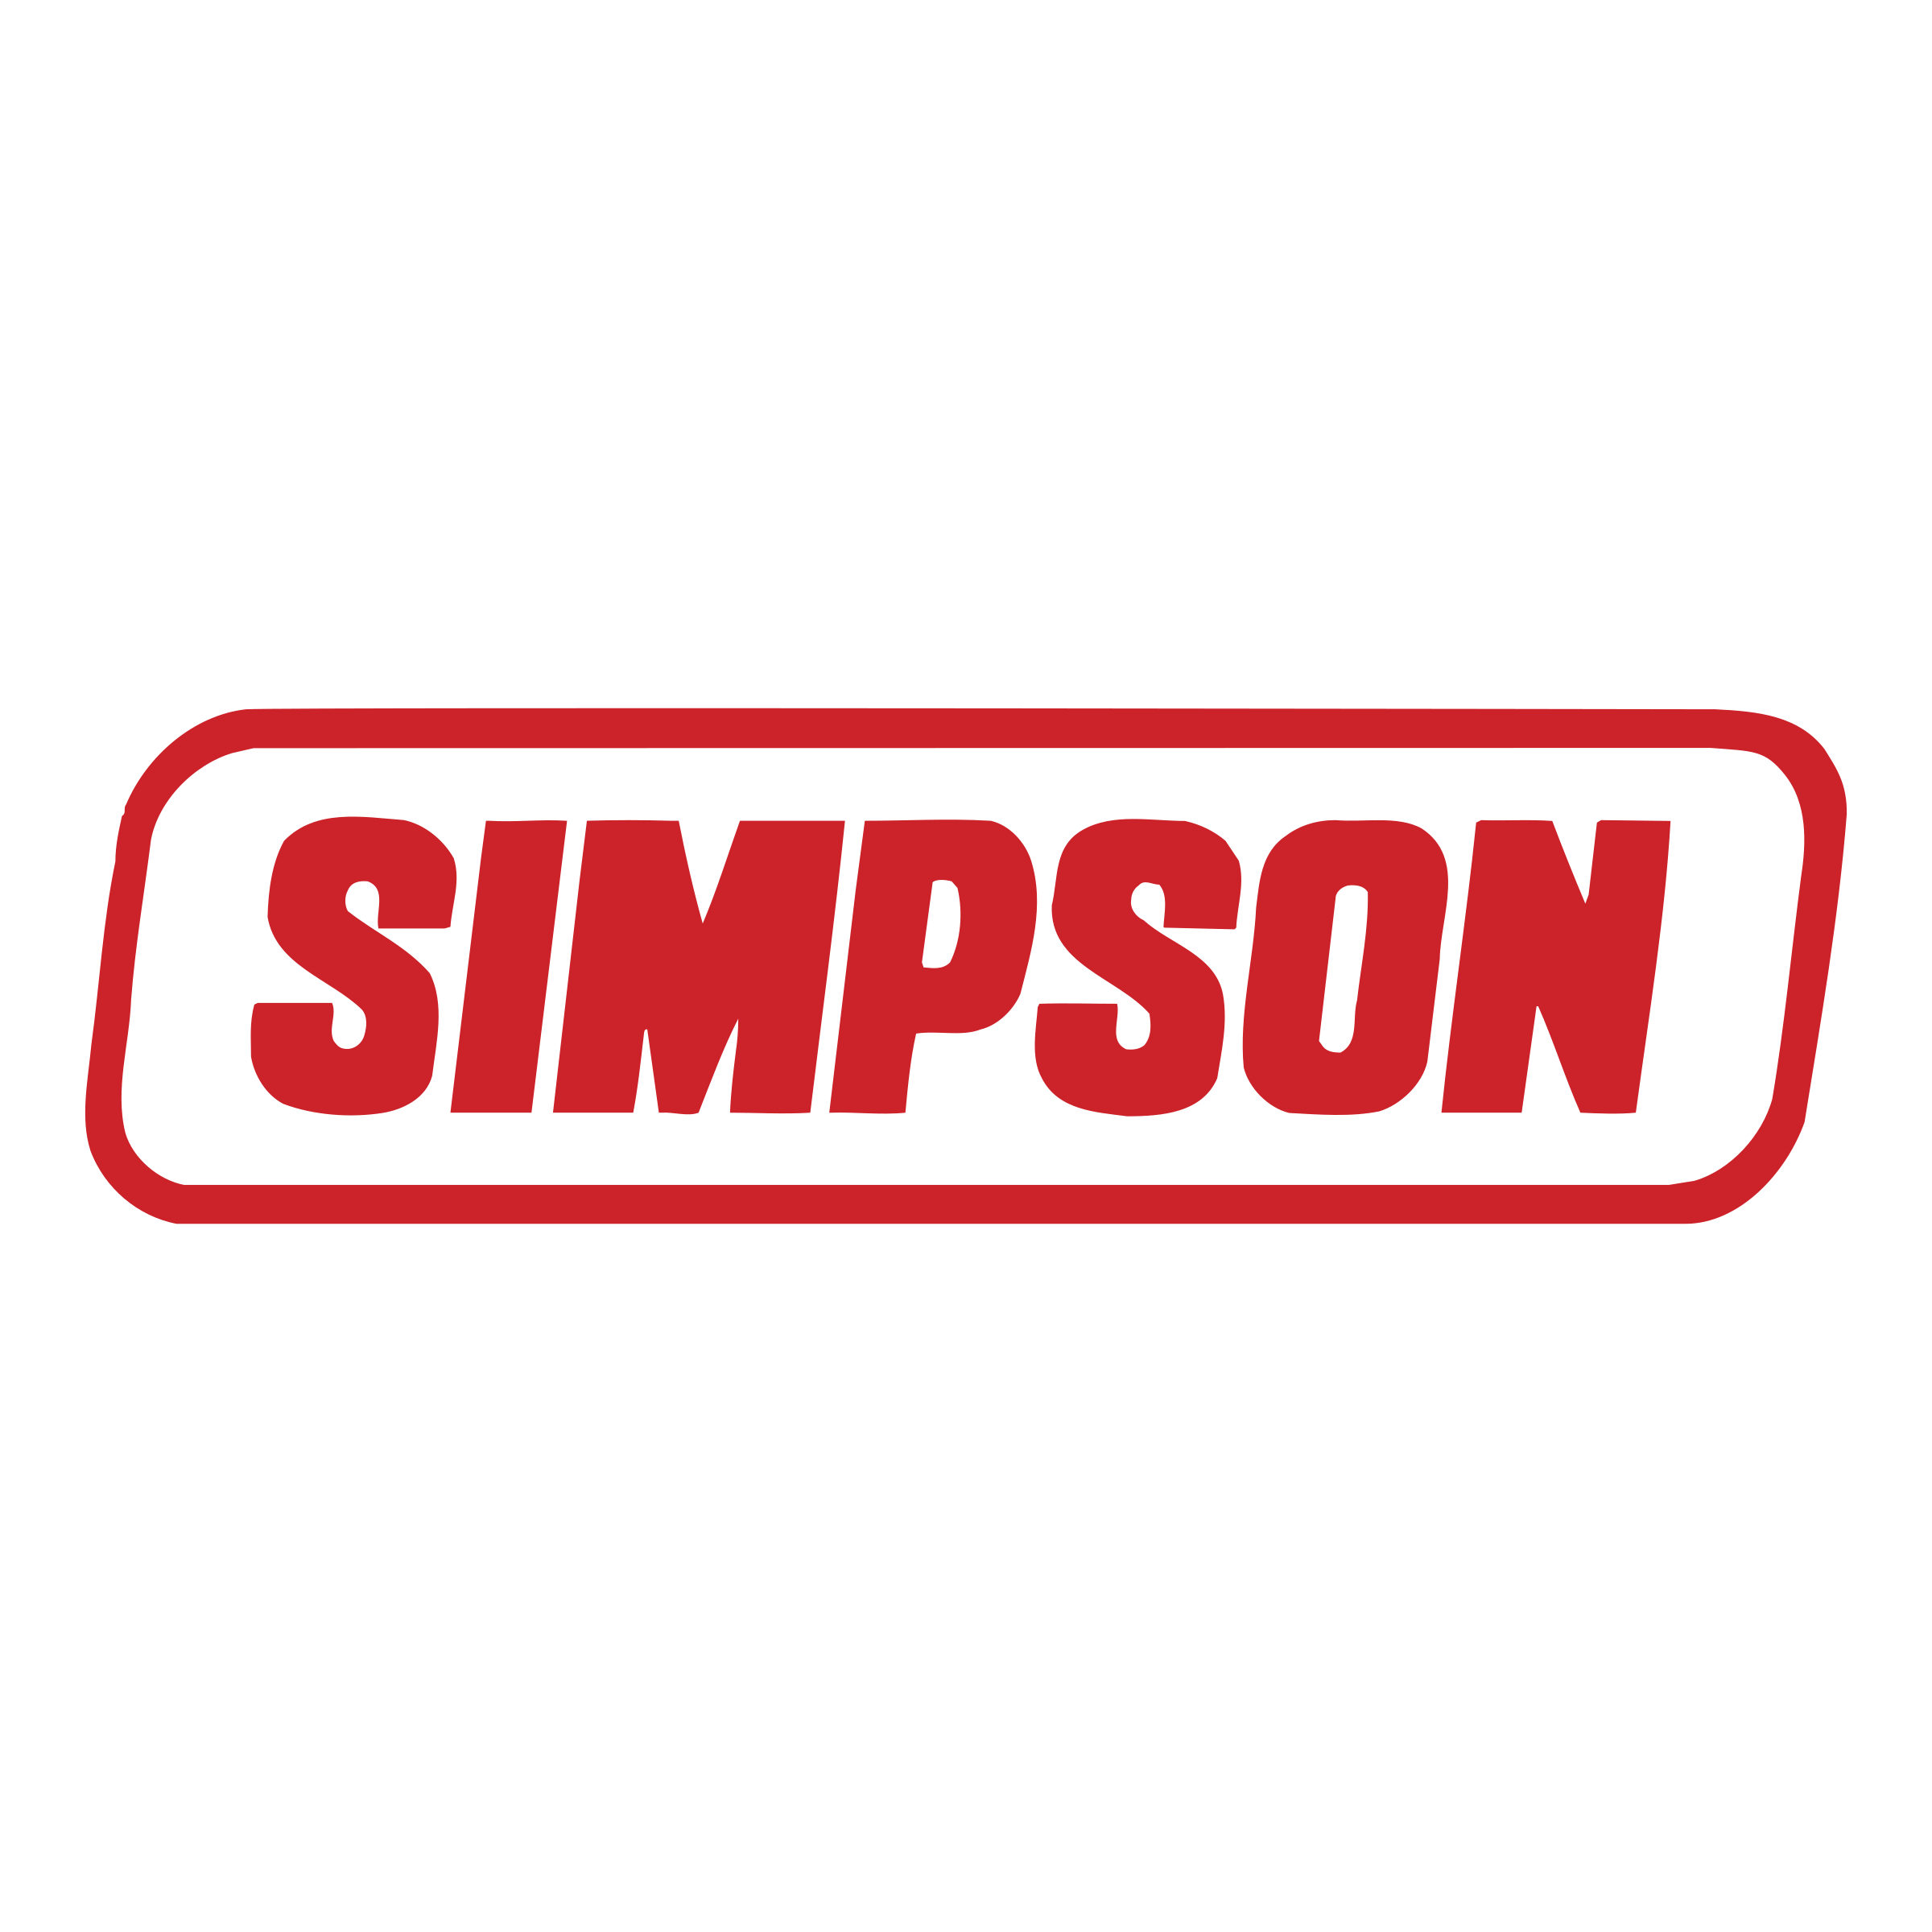 Simpson Logo - Simpson Logo PNG Transparent & SVG Vector - Freebie Supply